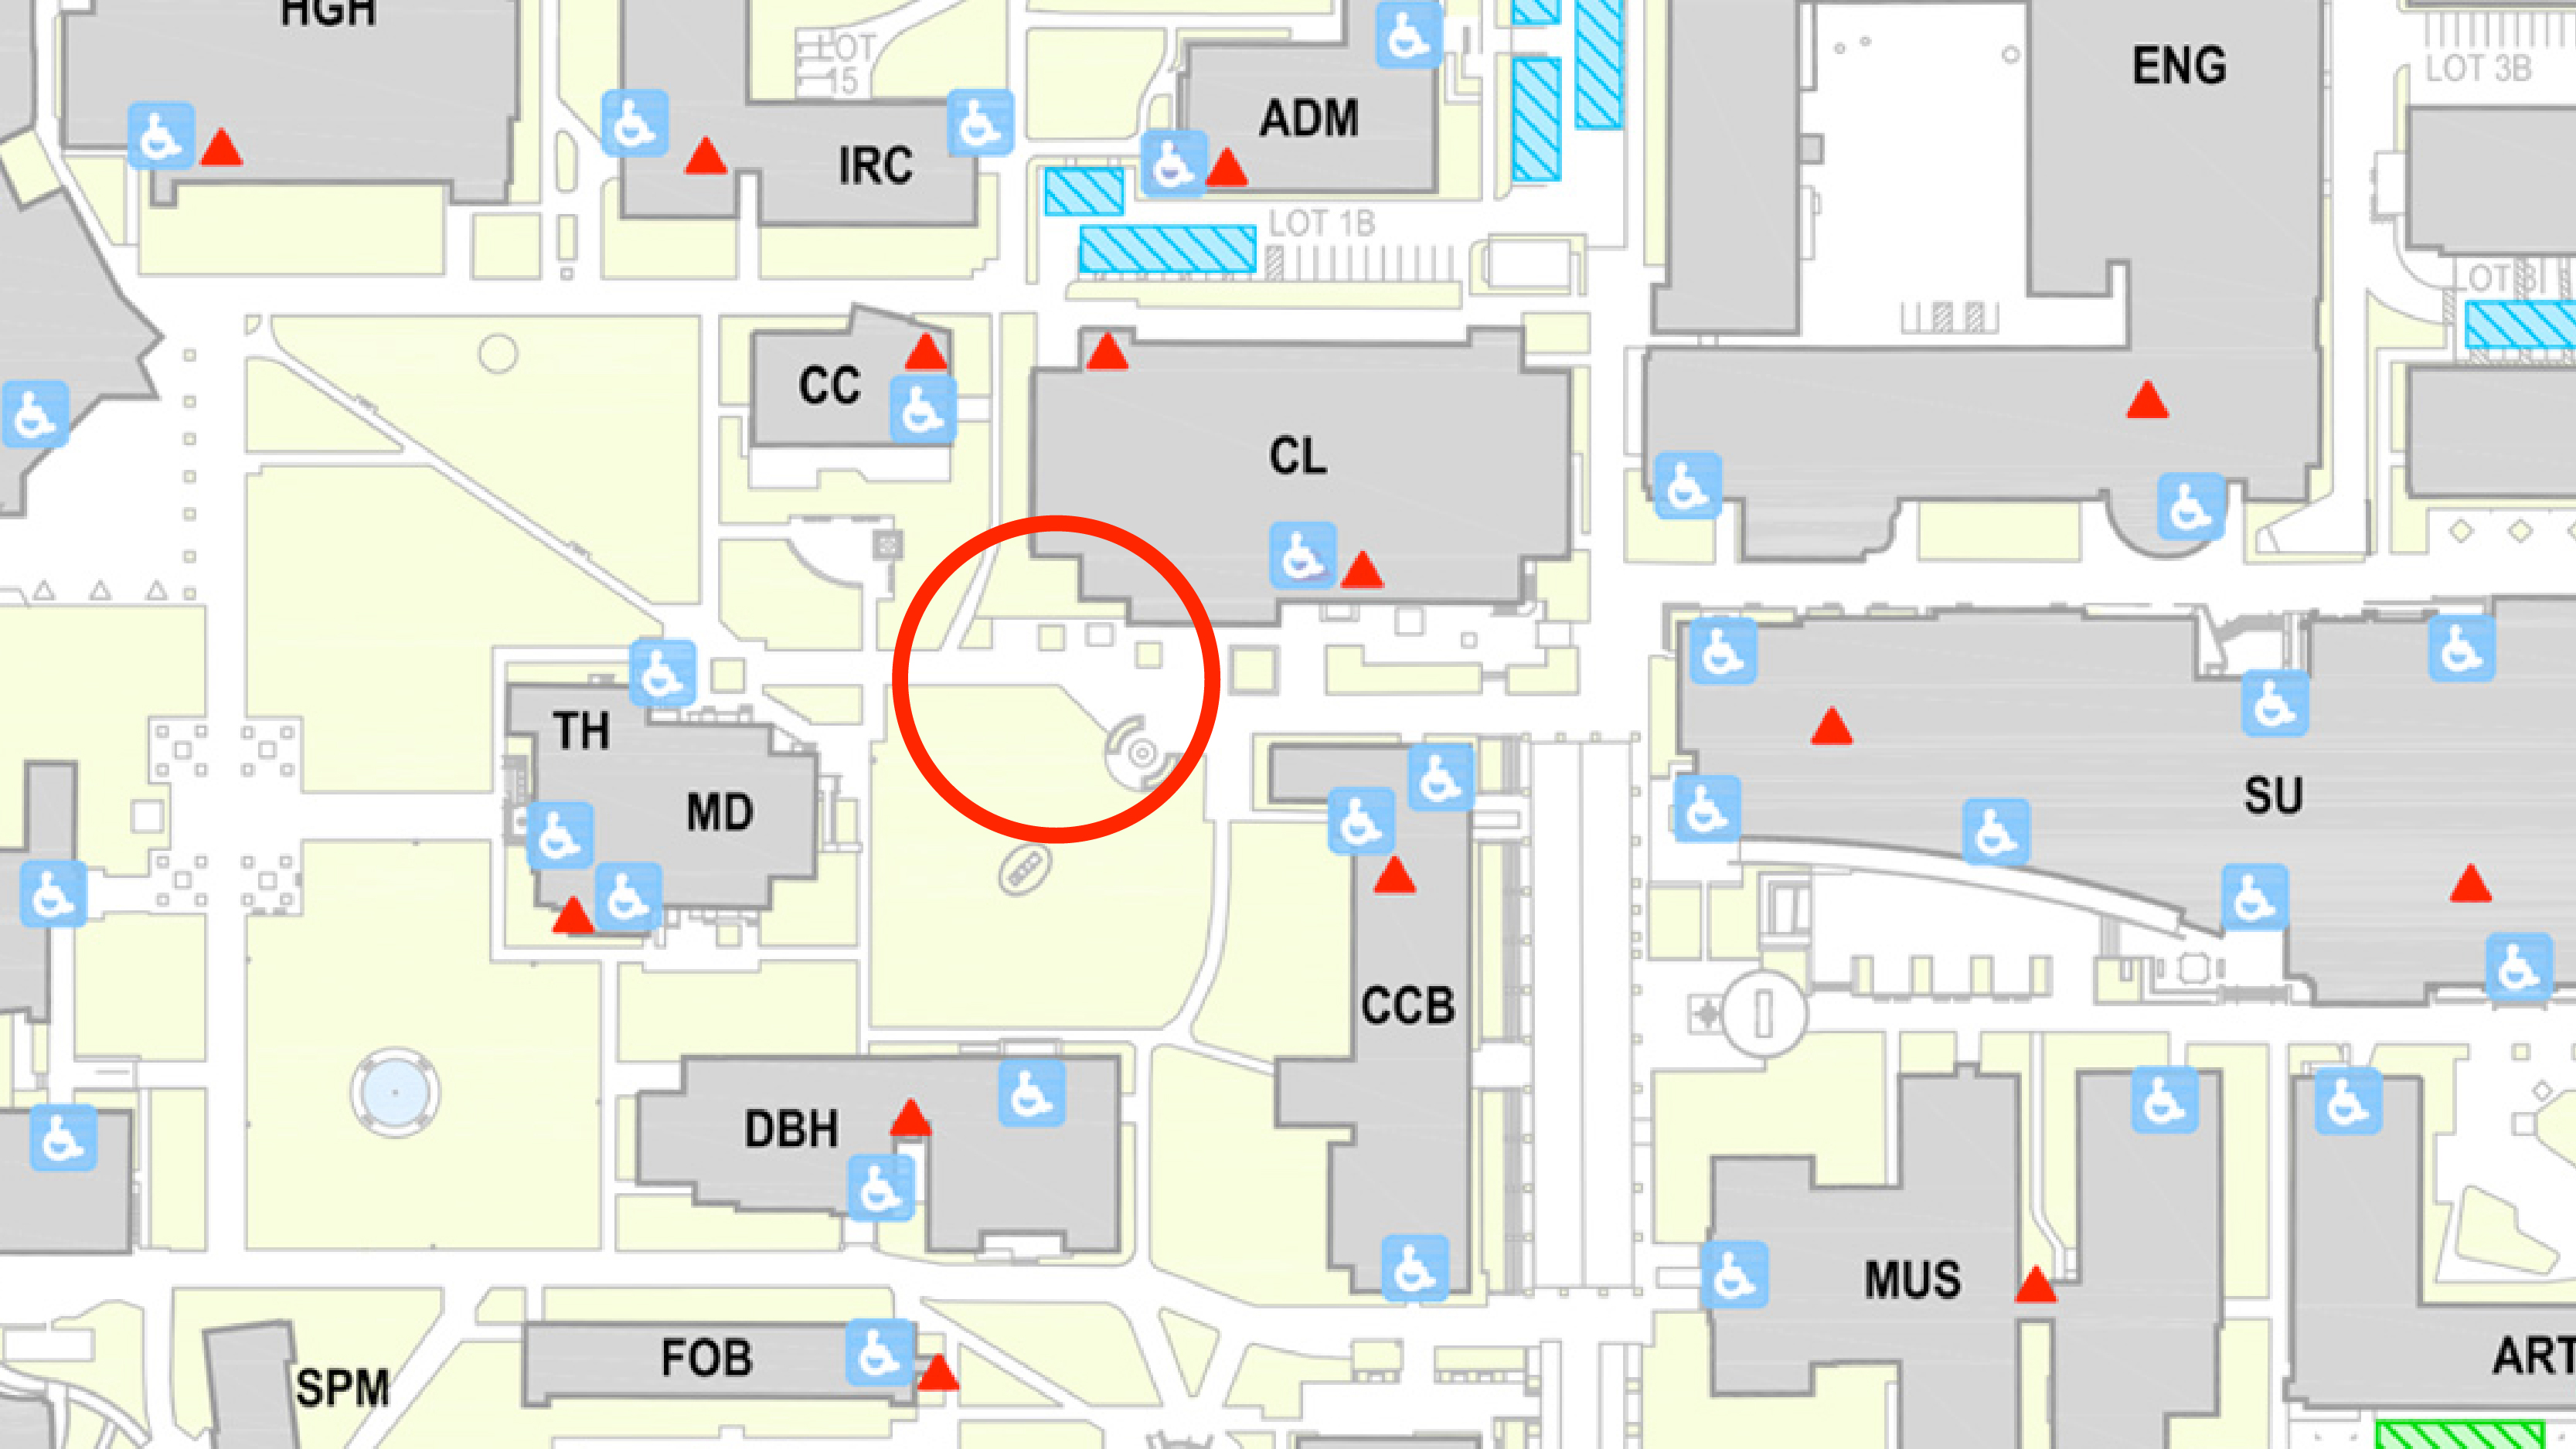 Map of SJSU with Clark Hall circled